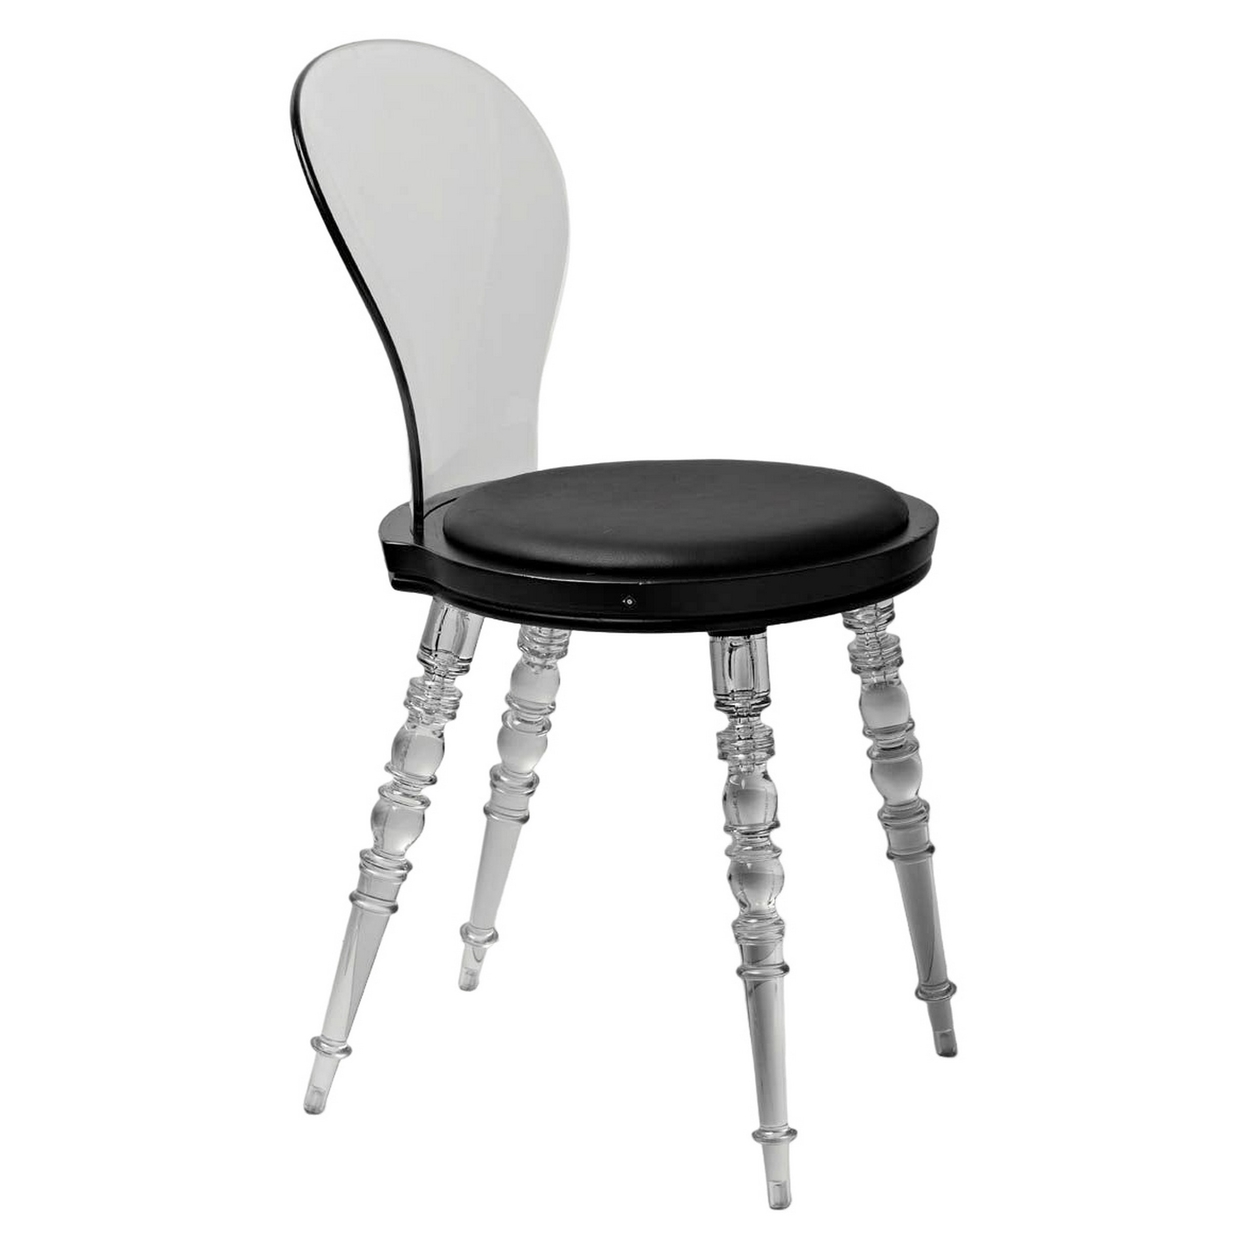 Rari 19 Inch Crystal Clear Armless Chair, Padded Black Vegan Leather Seat - Saltoro Sherpi